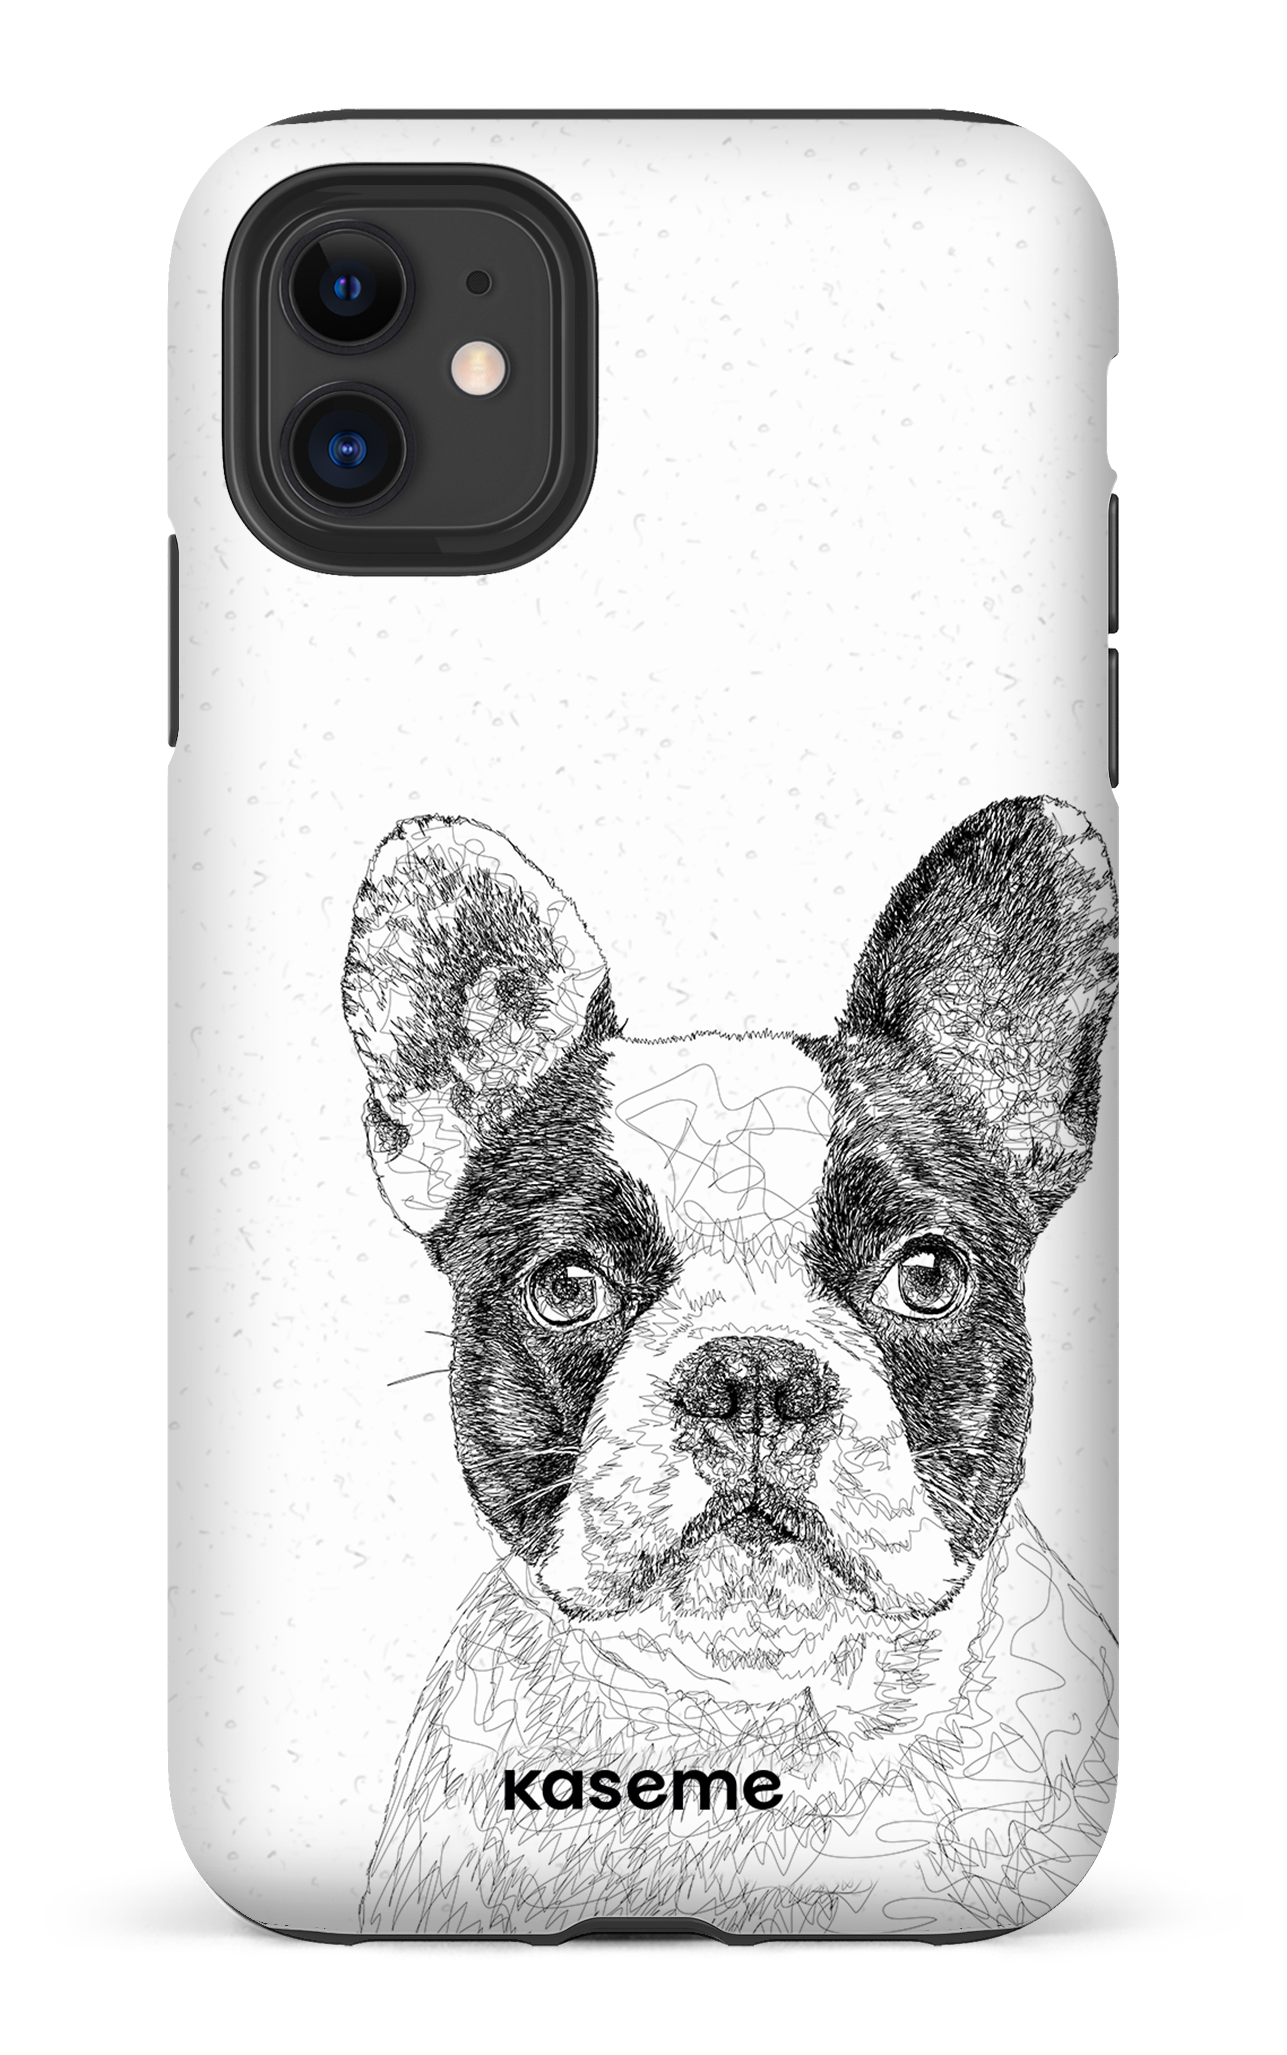 French Bulldog - iPhone 11